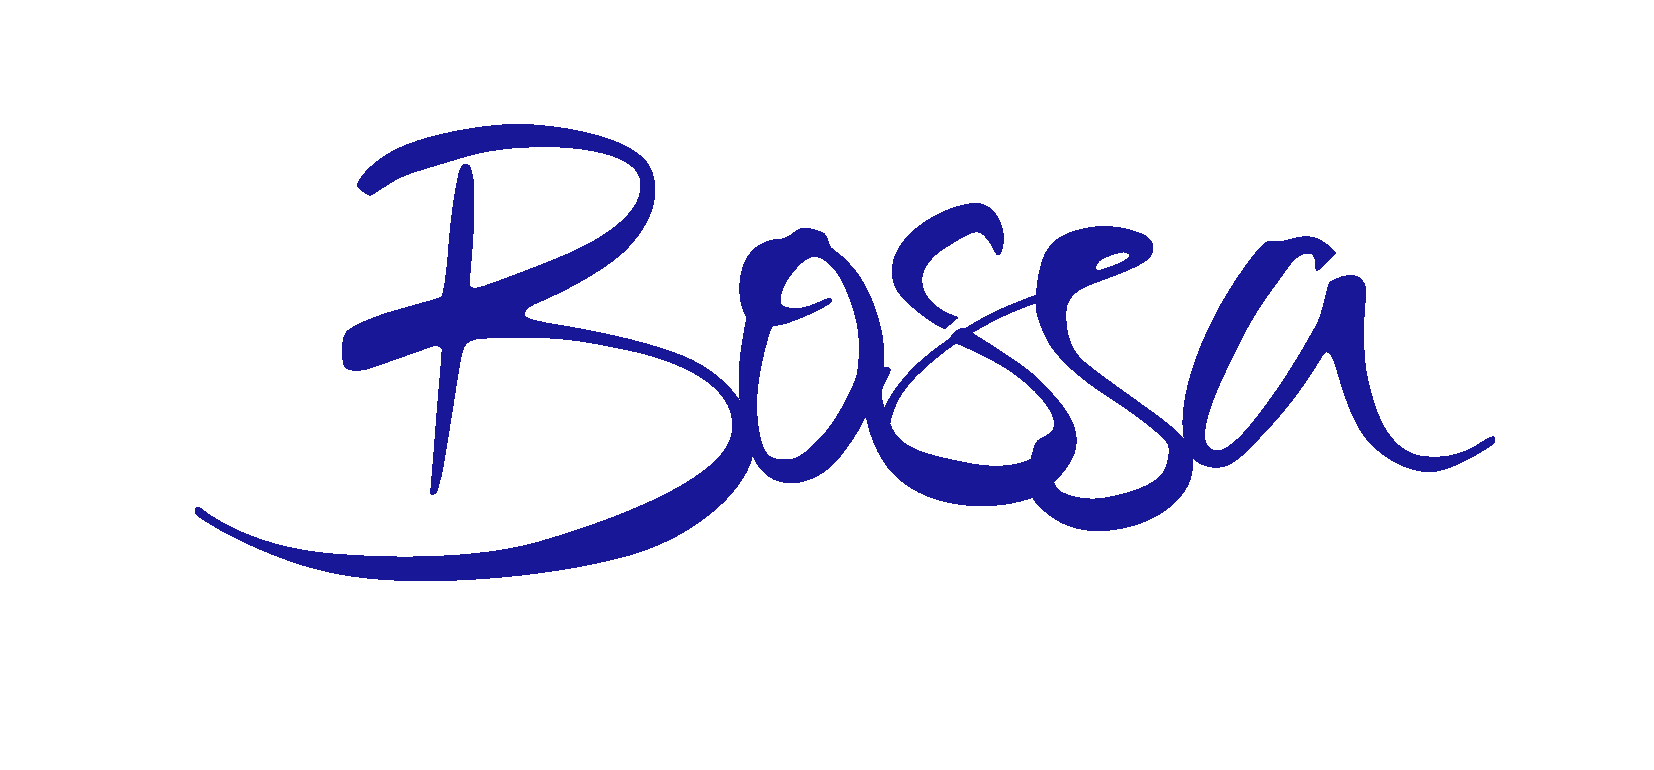 Bossa Brand Logo